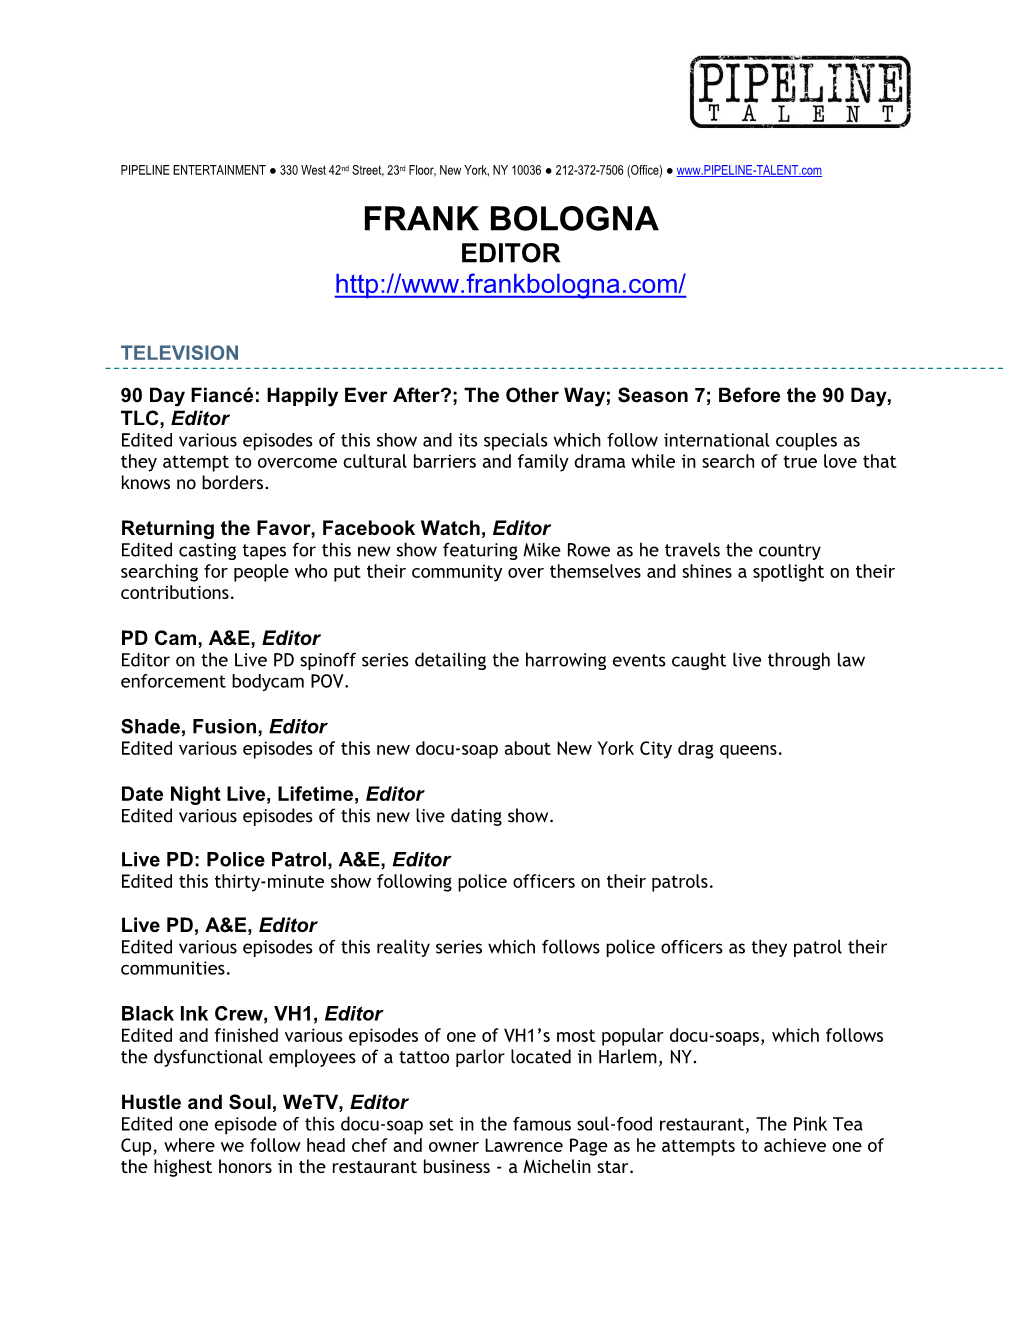 Frank Bologna Editor